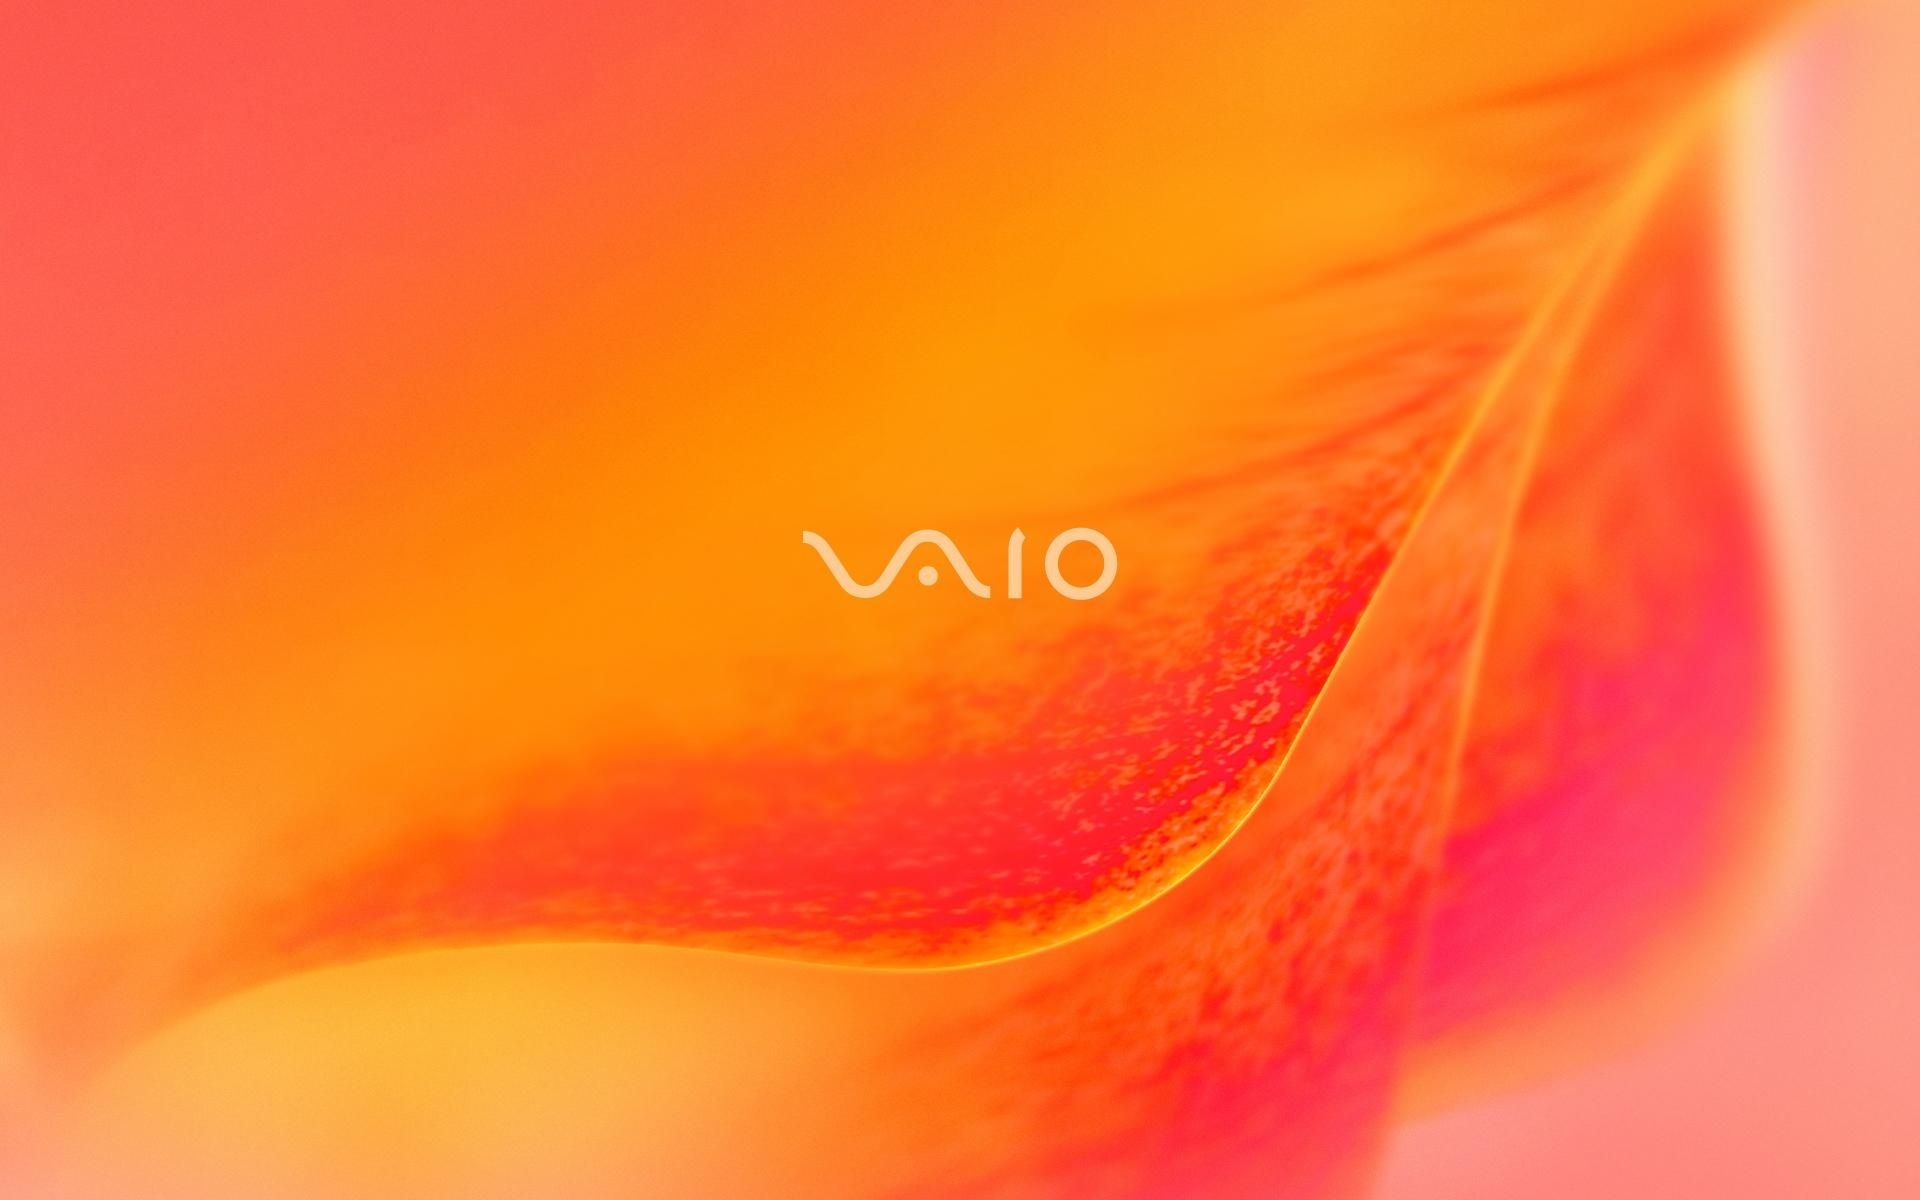 Sony Vaio Orange blossom for 1920 x 1200 widescreen resolution